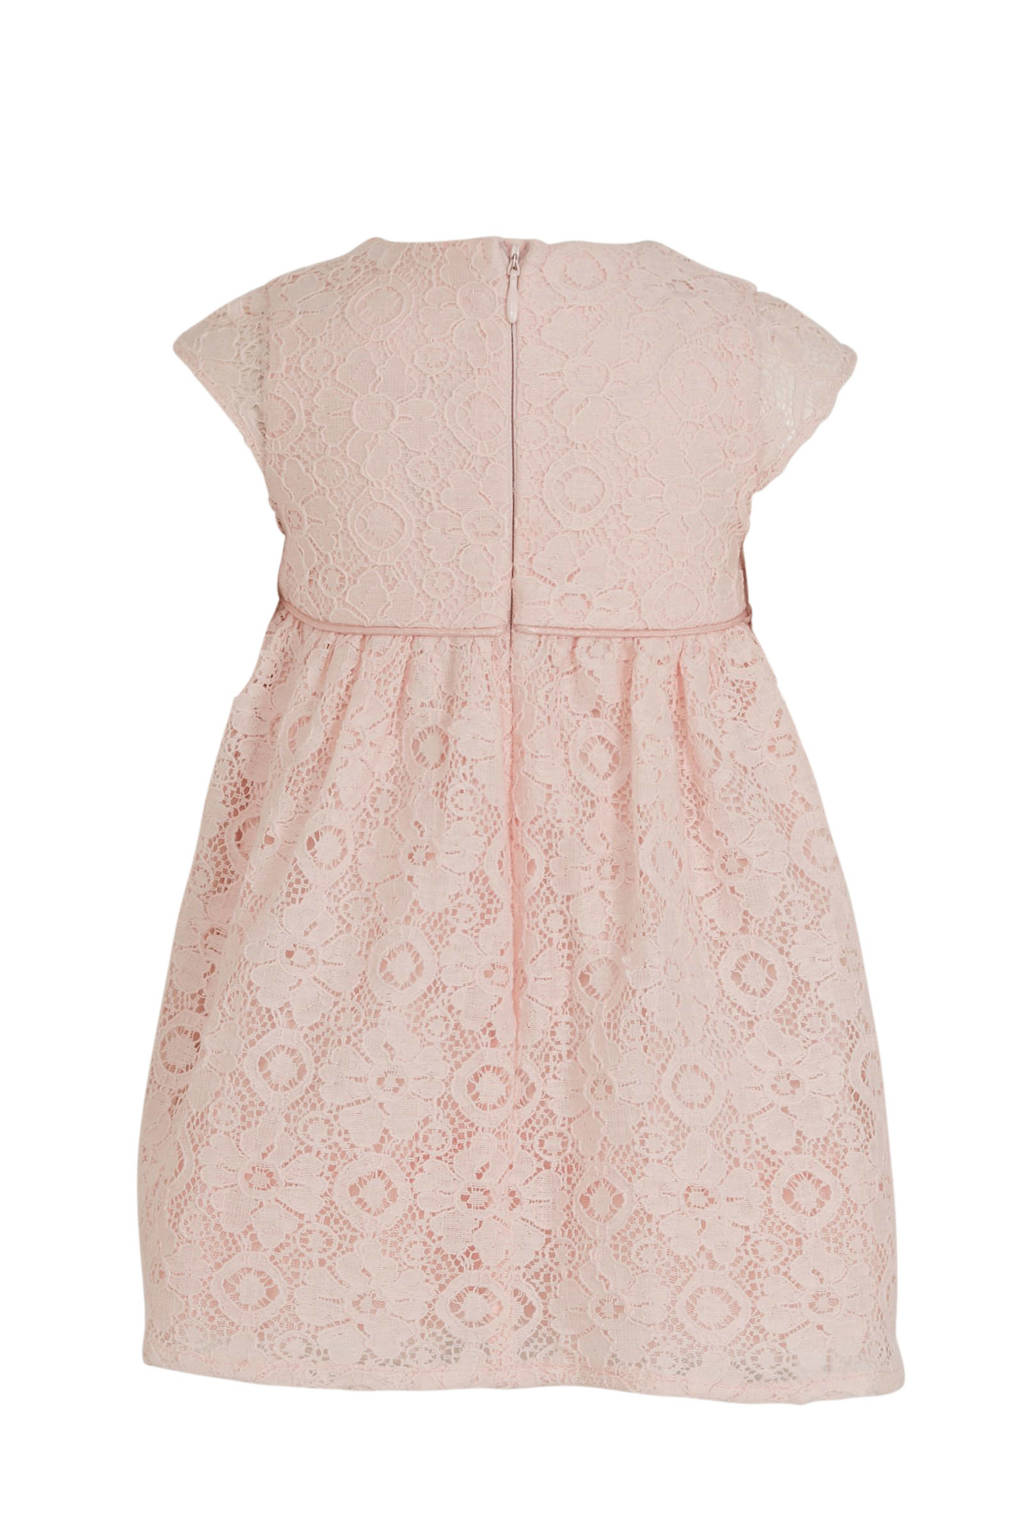 Betere C&A Baby Club A-lijn jurk en kant roze | wehkamp FT-81